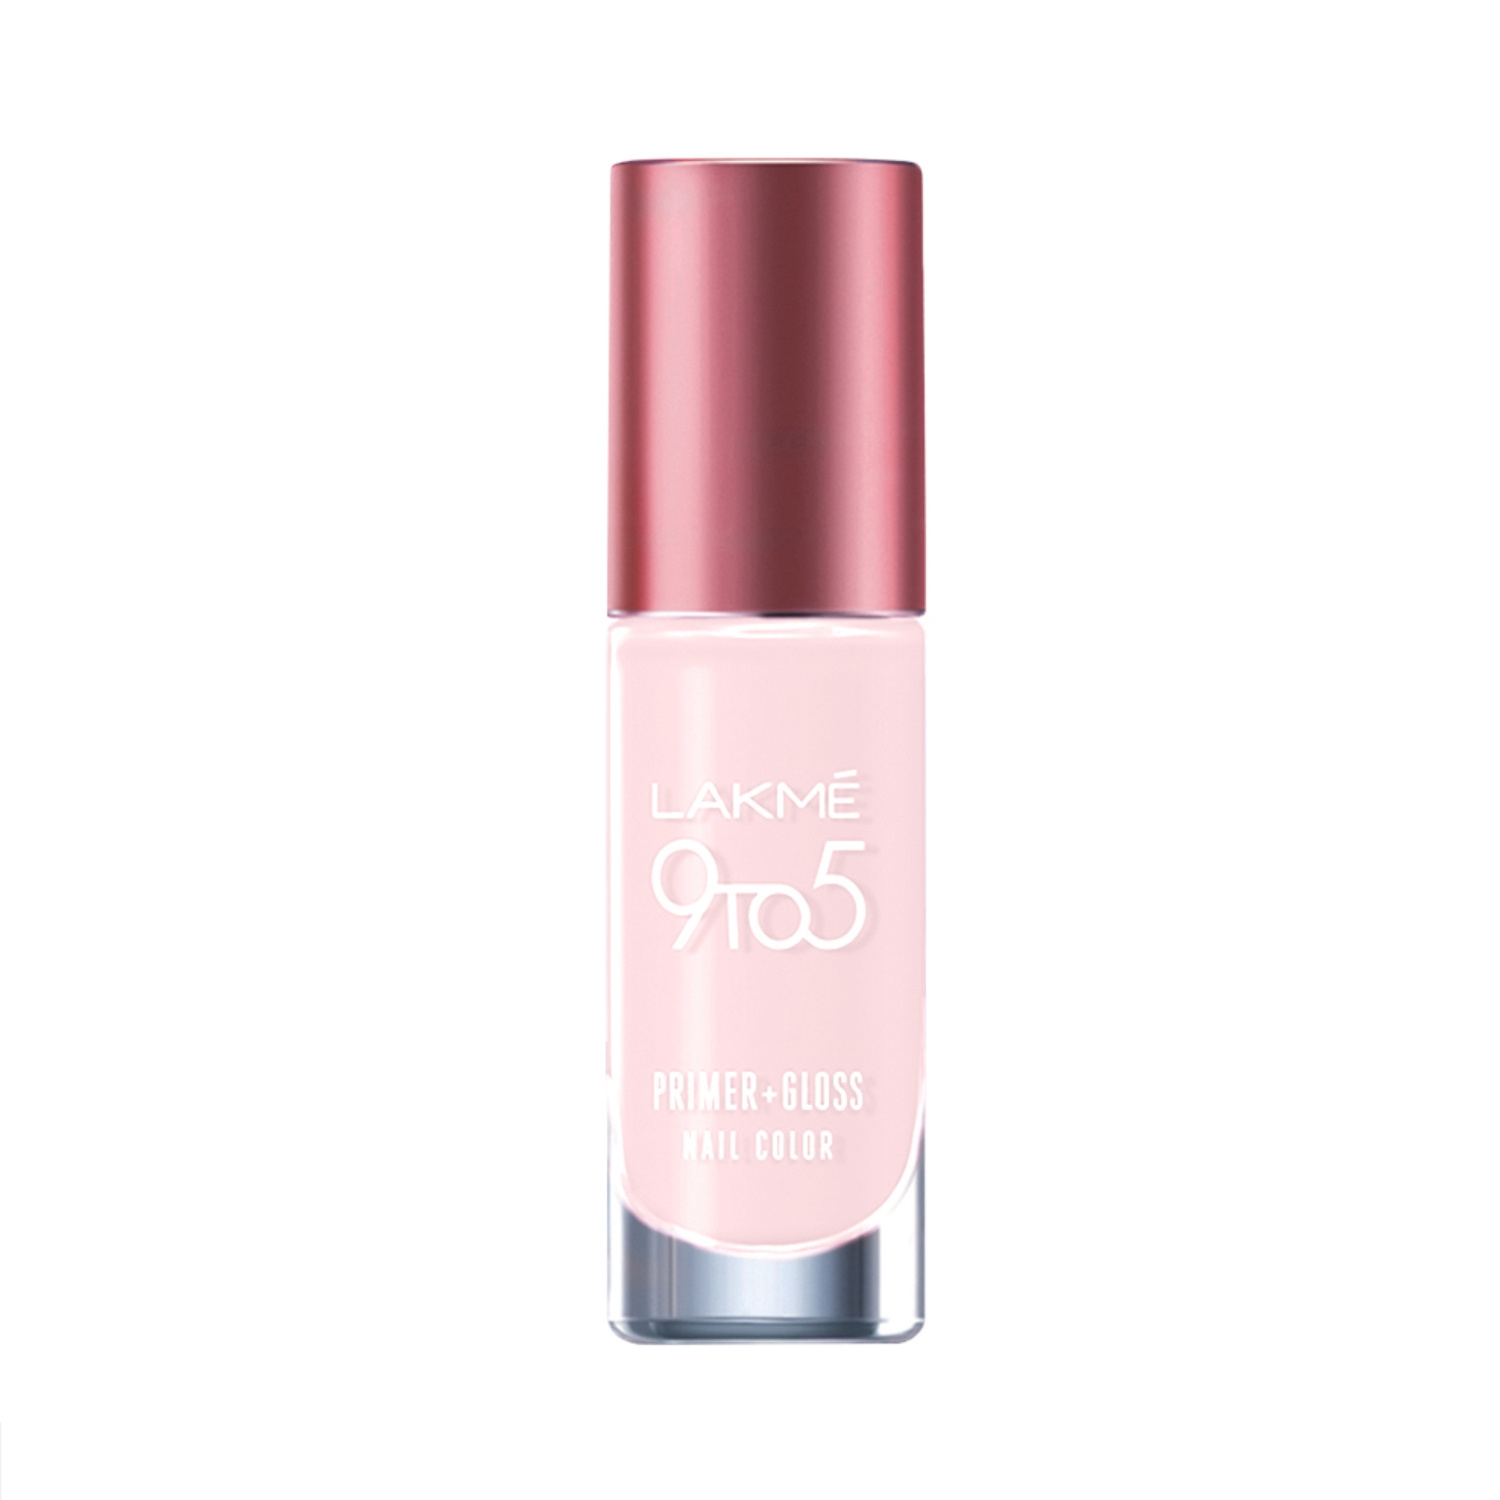 Lakme | Lakme 9 To 5 Primer + Gloss Nail Color - Blush Pink (6ml)